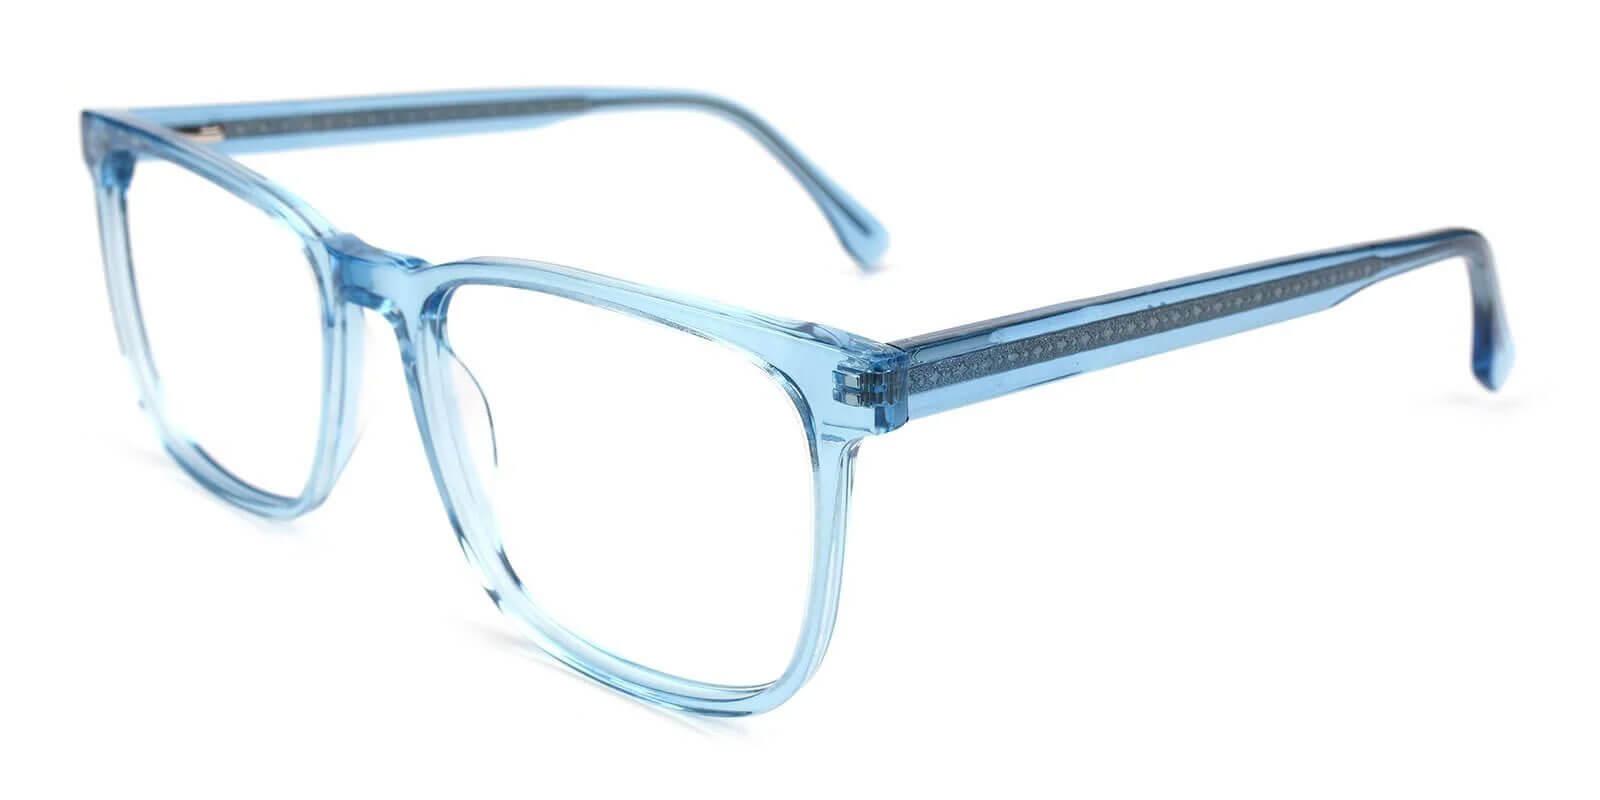 Kinjin Blue Acetate Eyeglasses , SpringHinges , UniversalBridgeFit Frames from ABBE Glasses